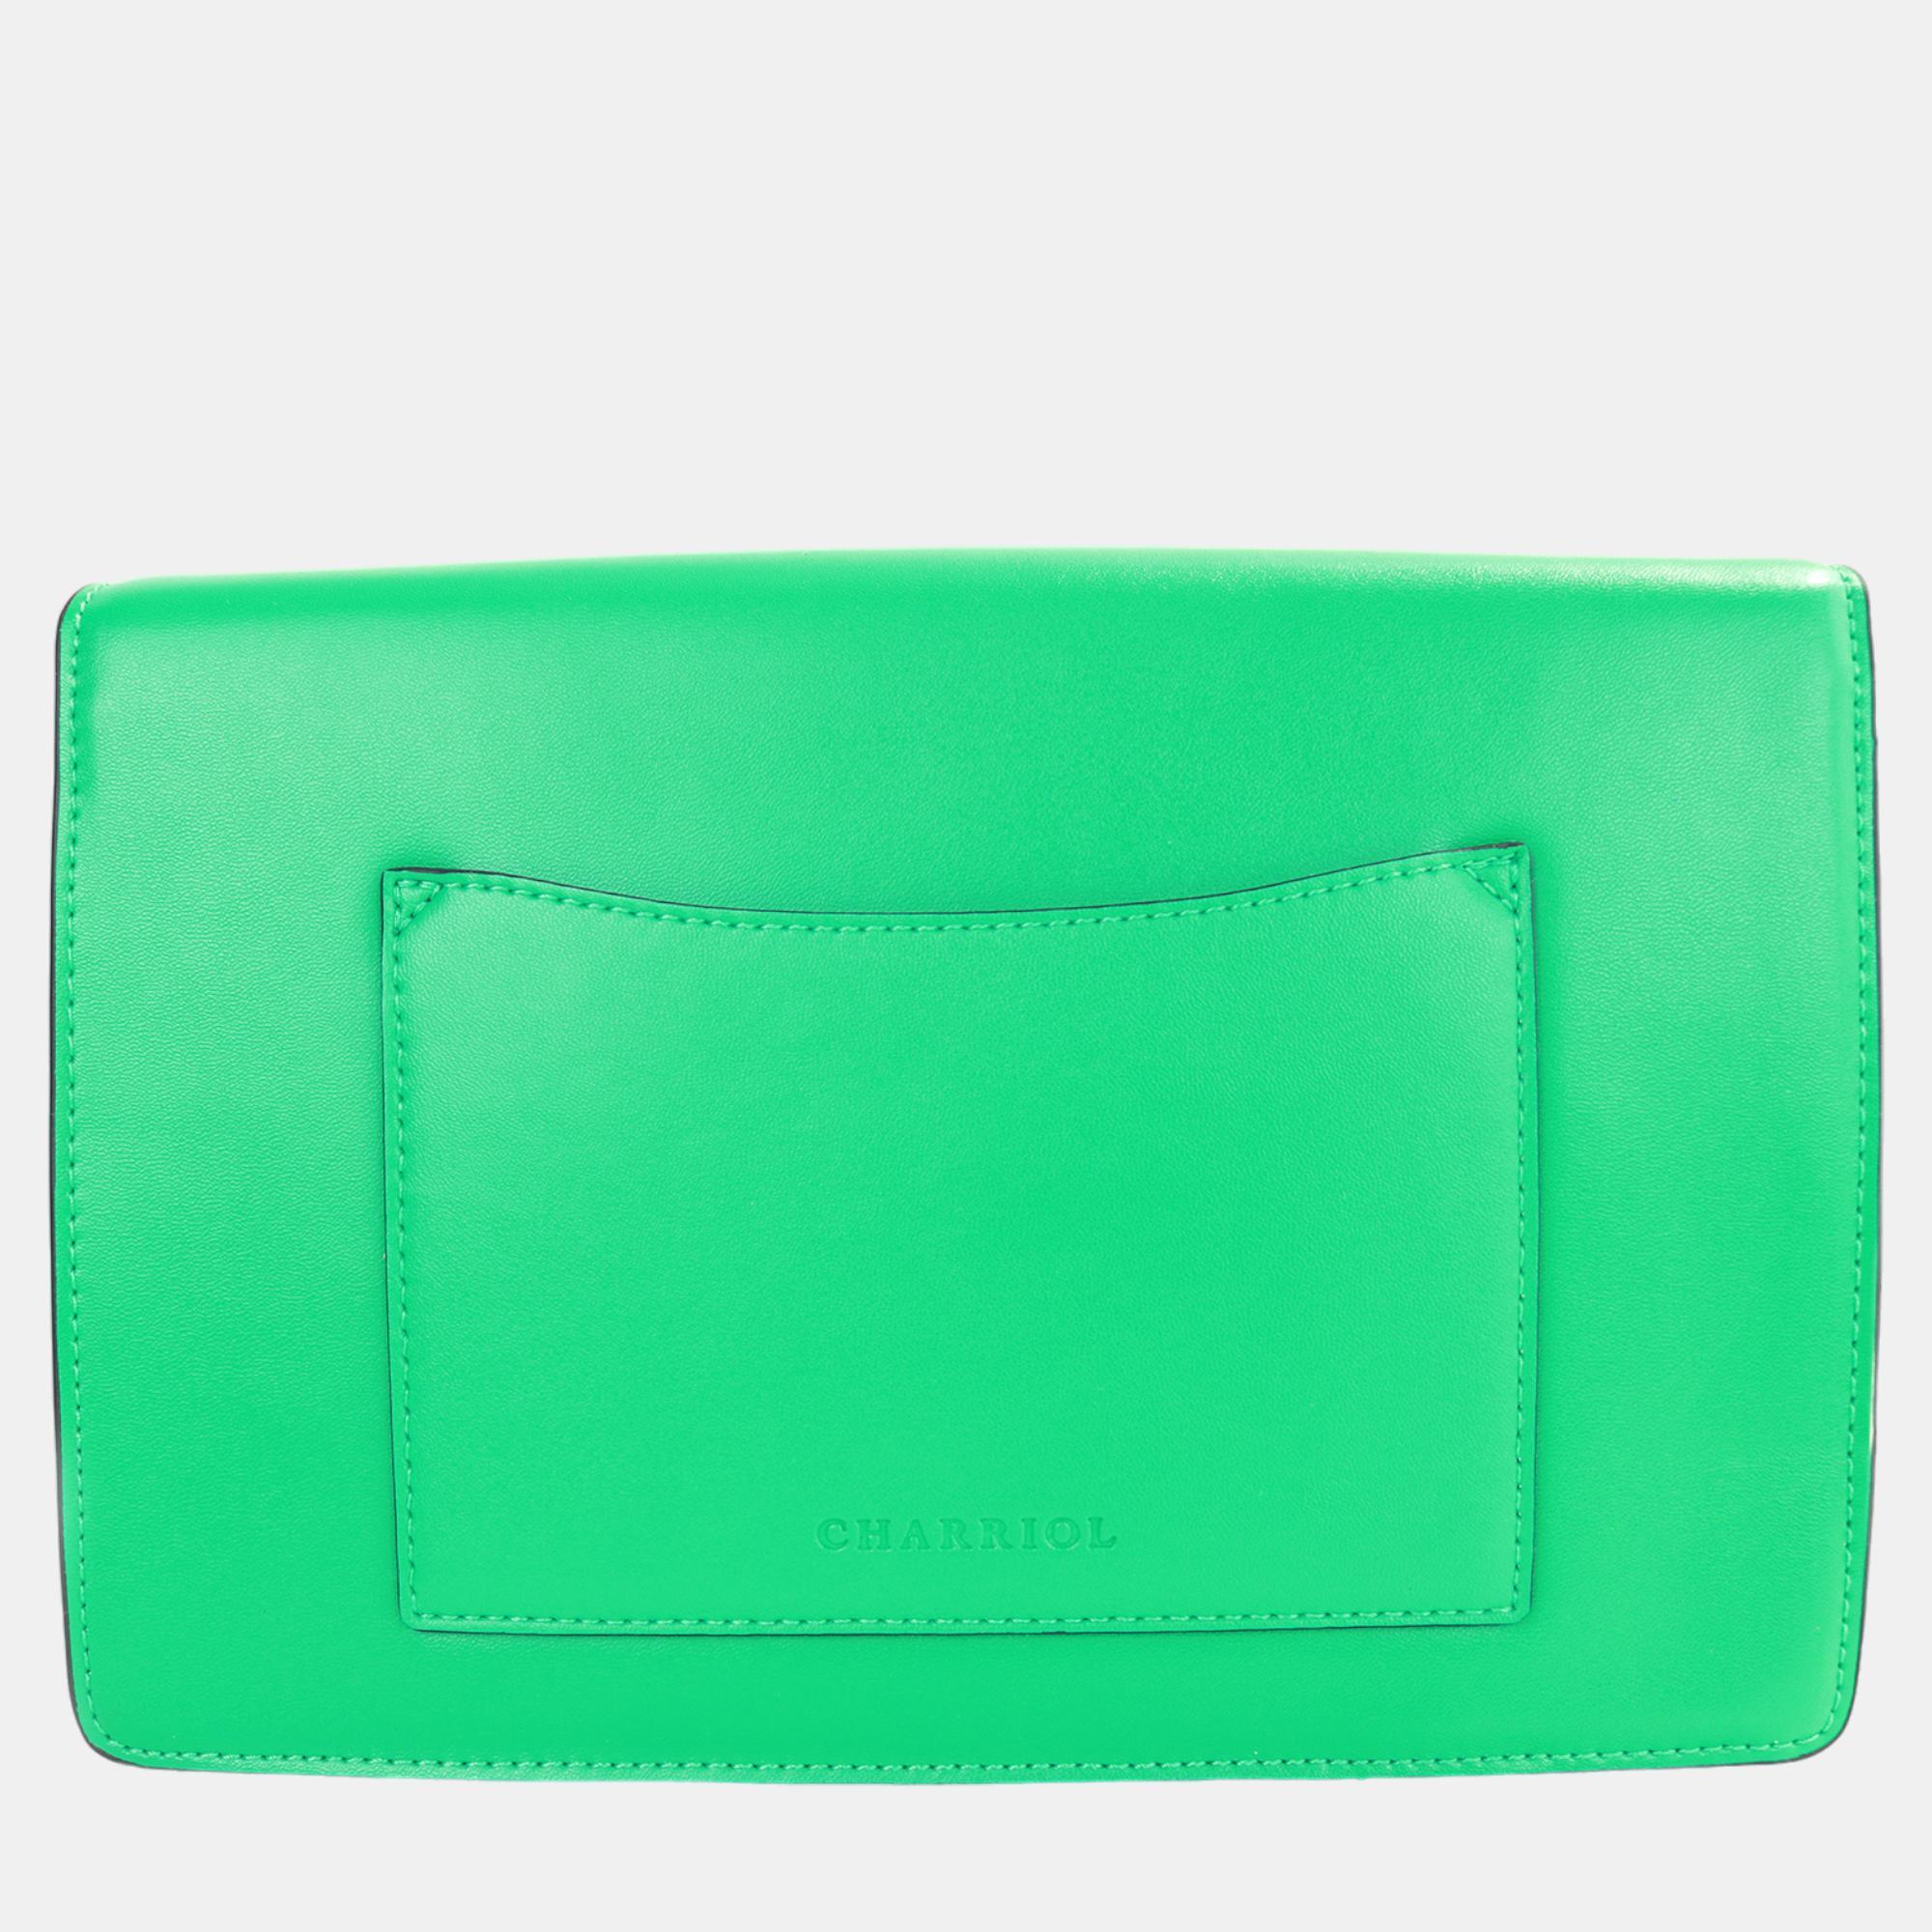 Charriol Green Leather TWIST Handbag